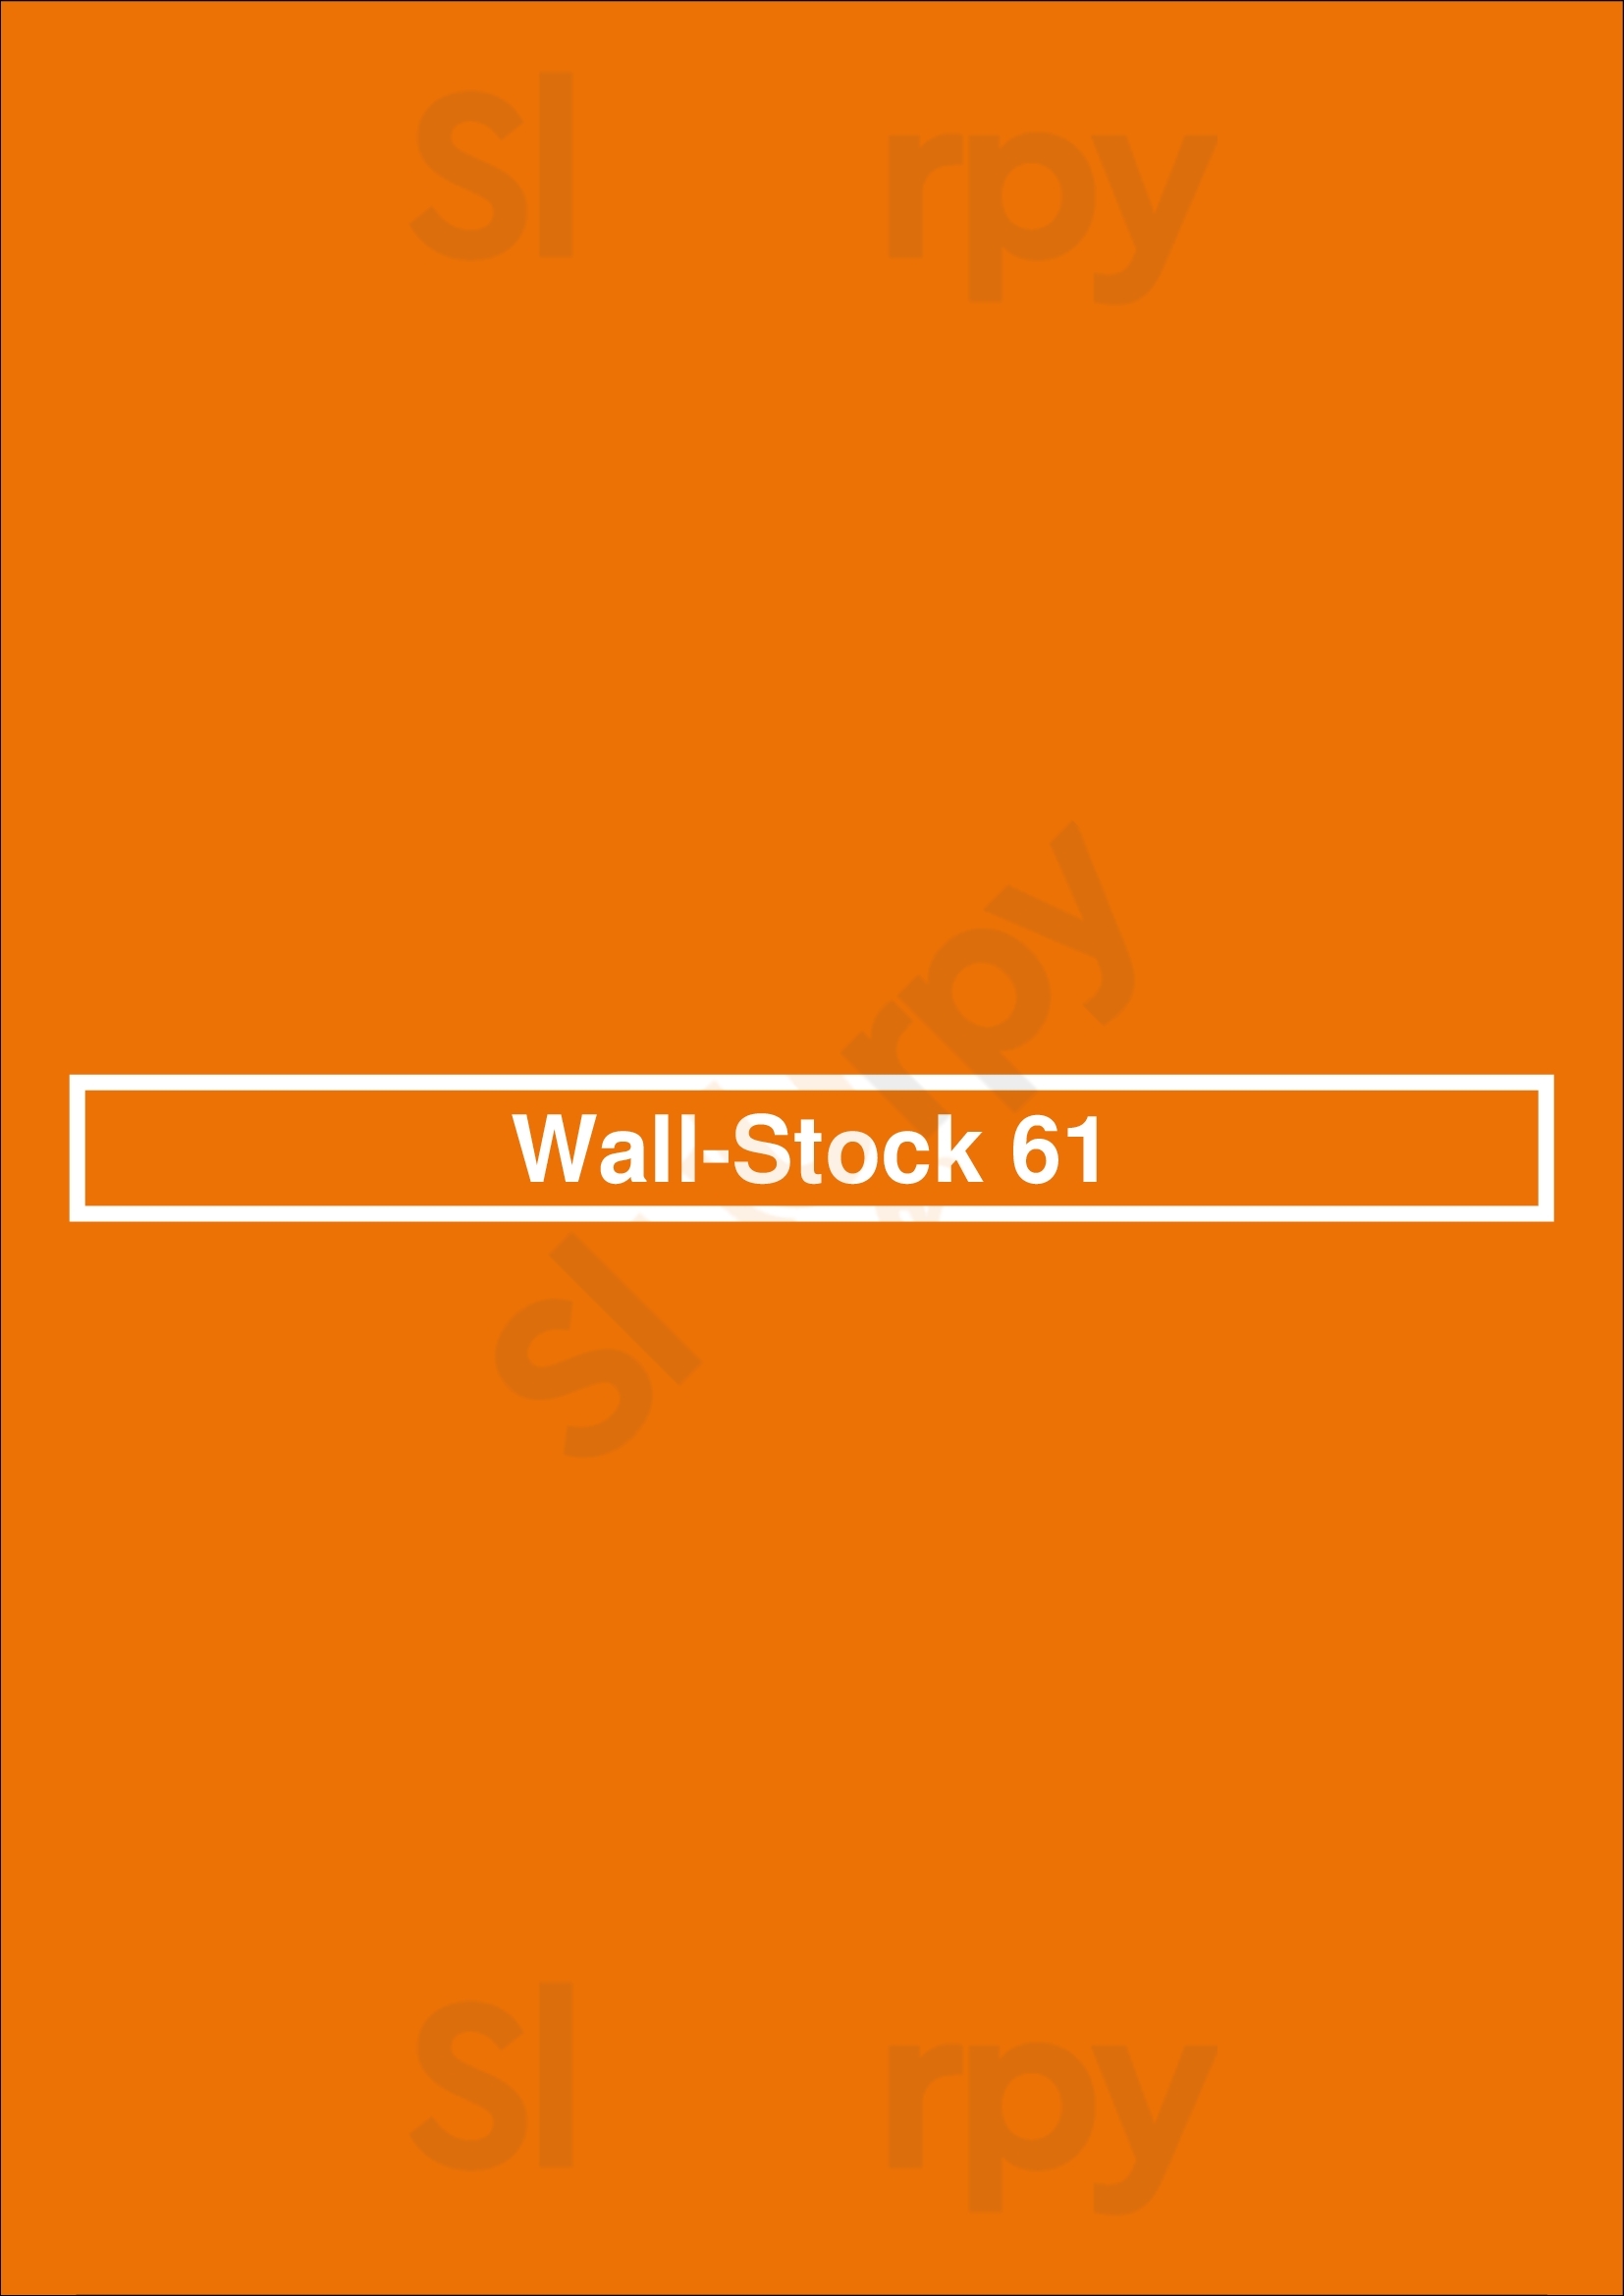 Wall-stock 61 Maastricht Menu - 1